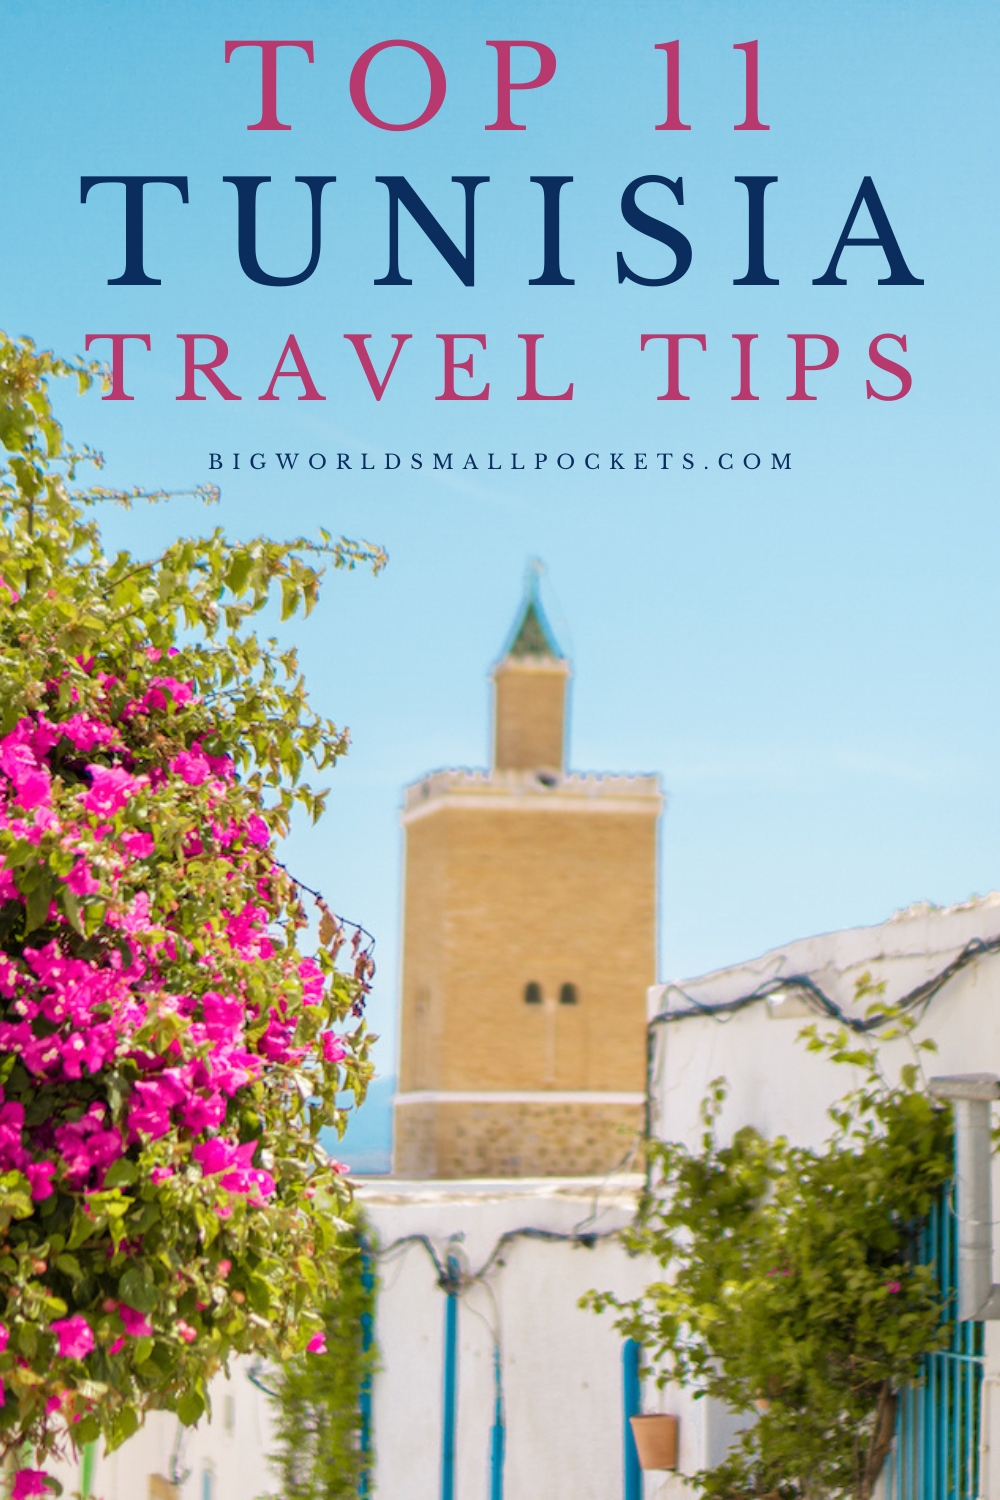 Top 11 Tunisia Travel Tips